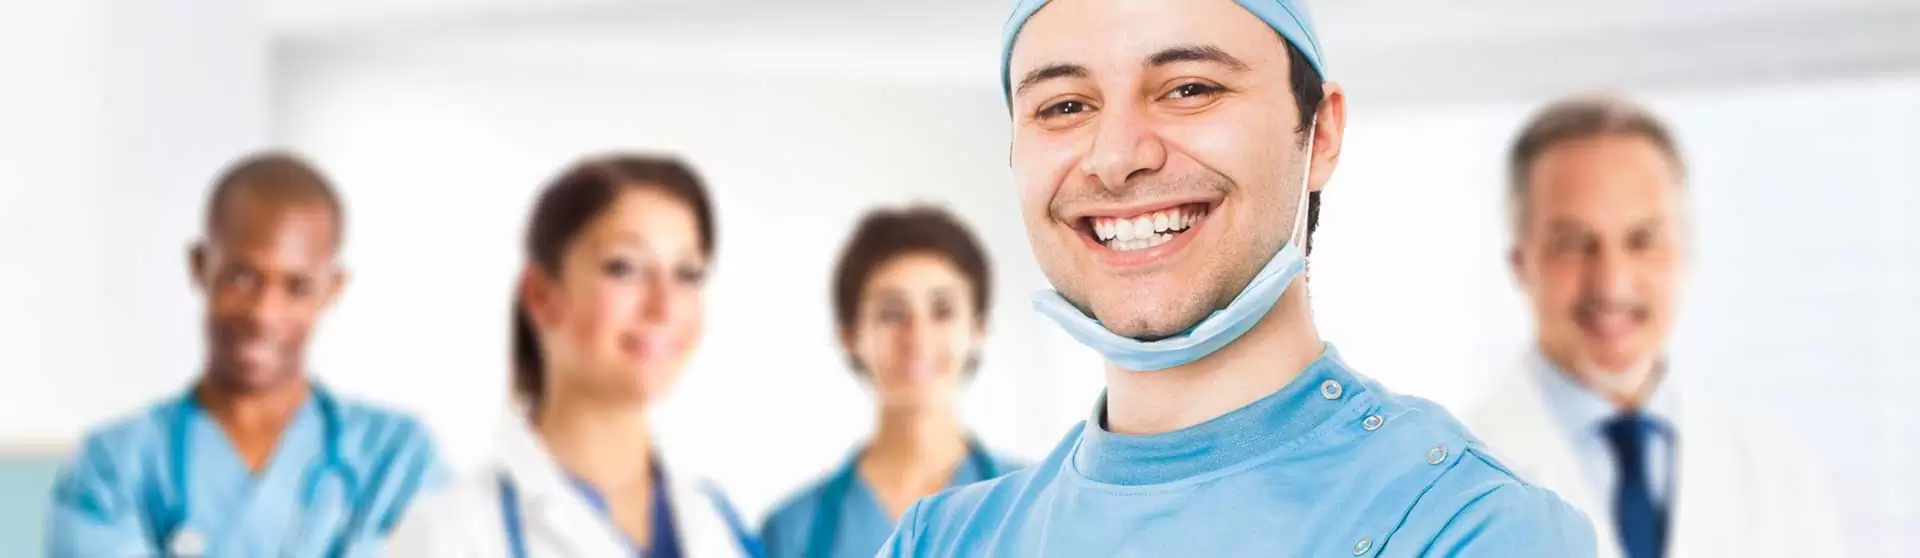 Confident team of Hamilton dentistry professionals